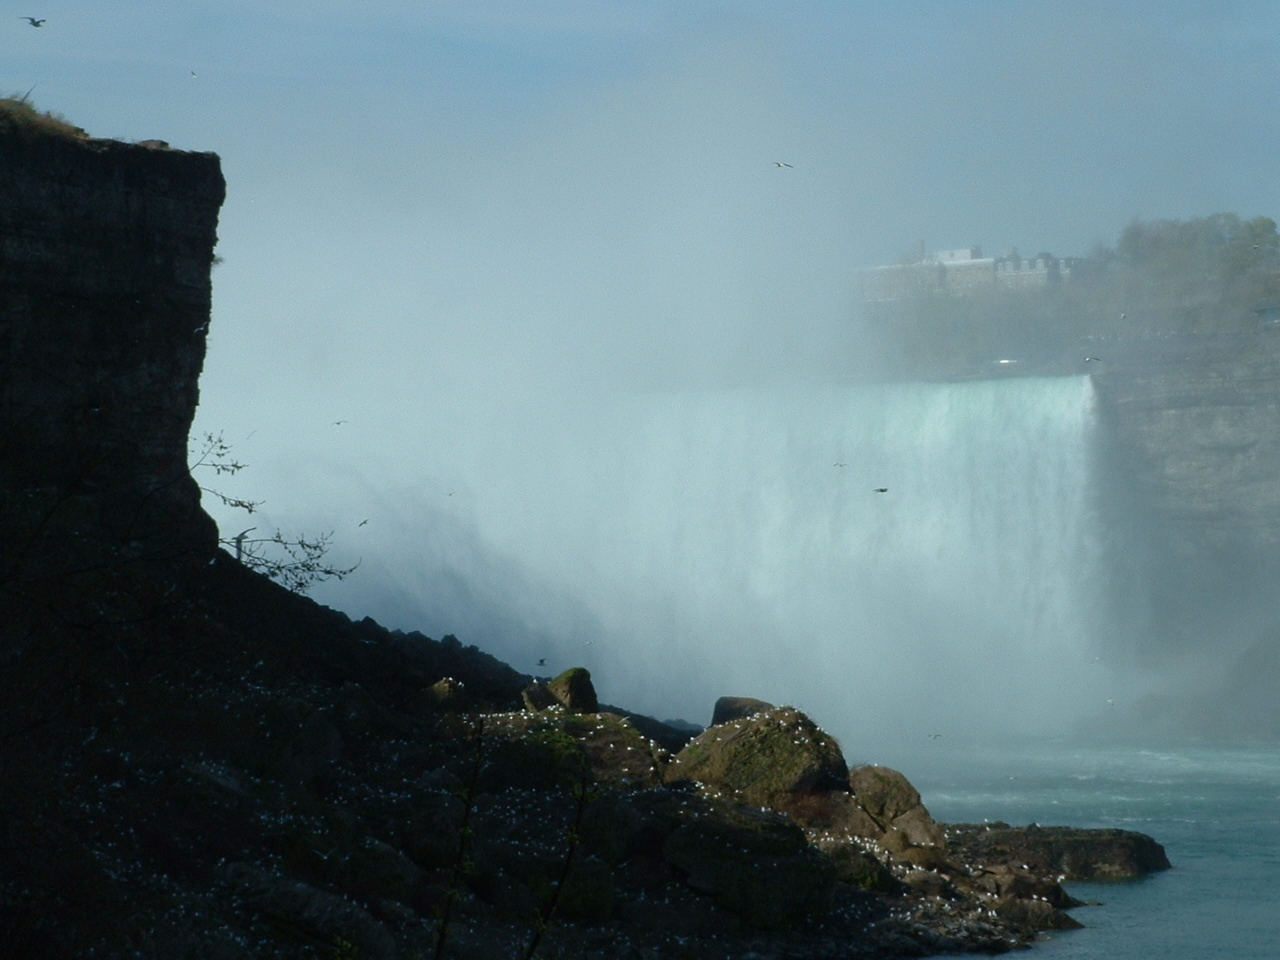 Maid of the mist,Niagara Falls